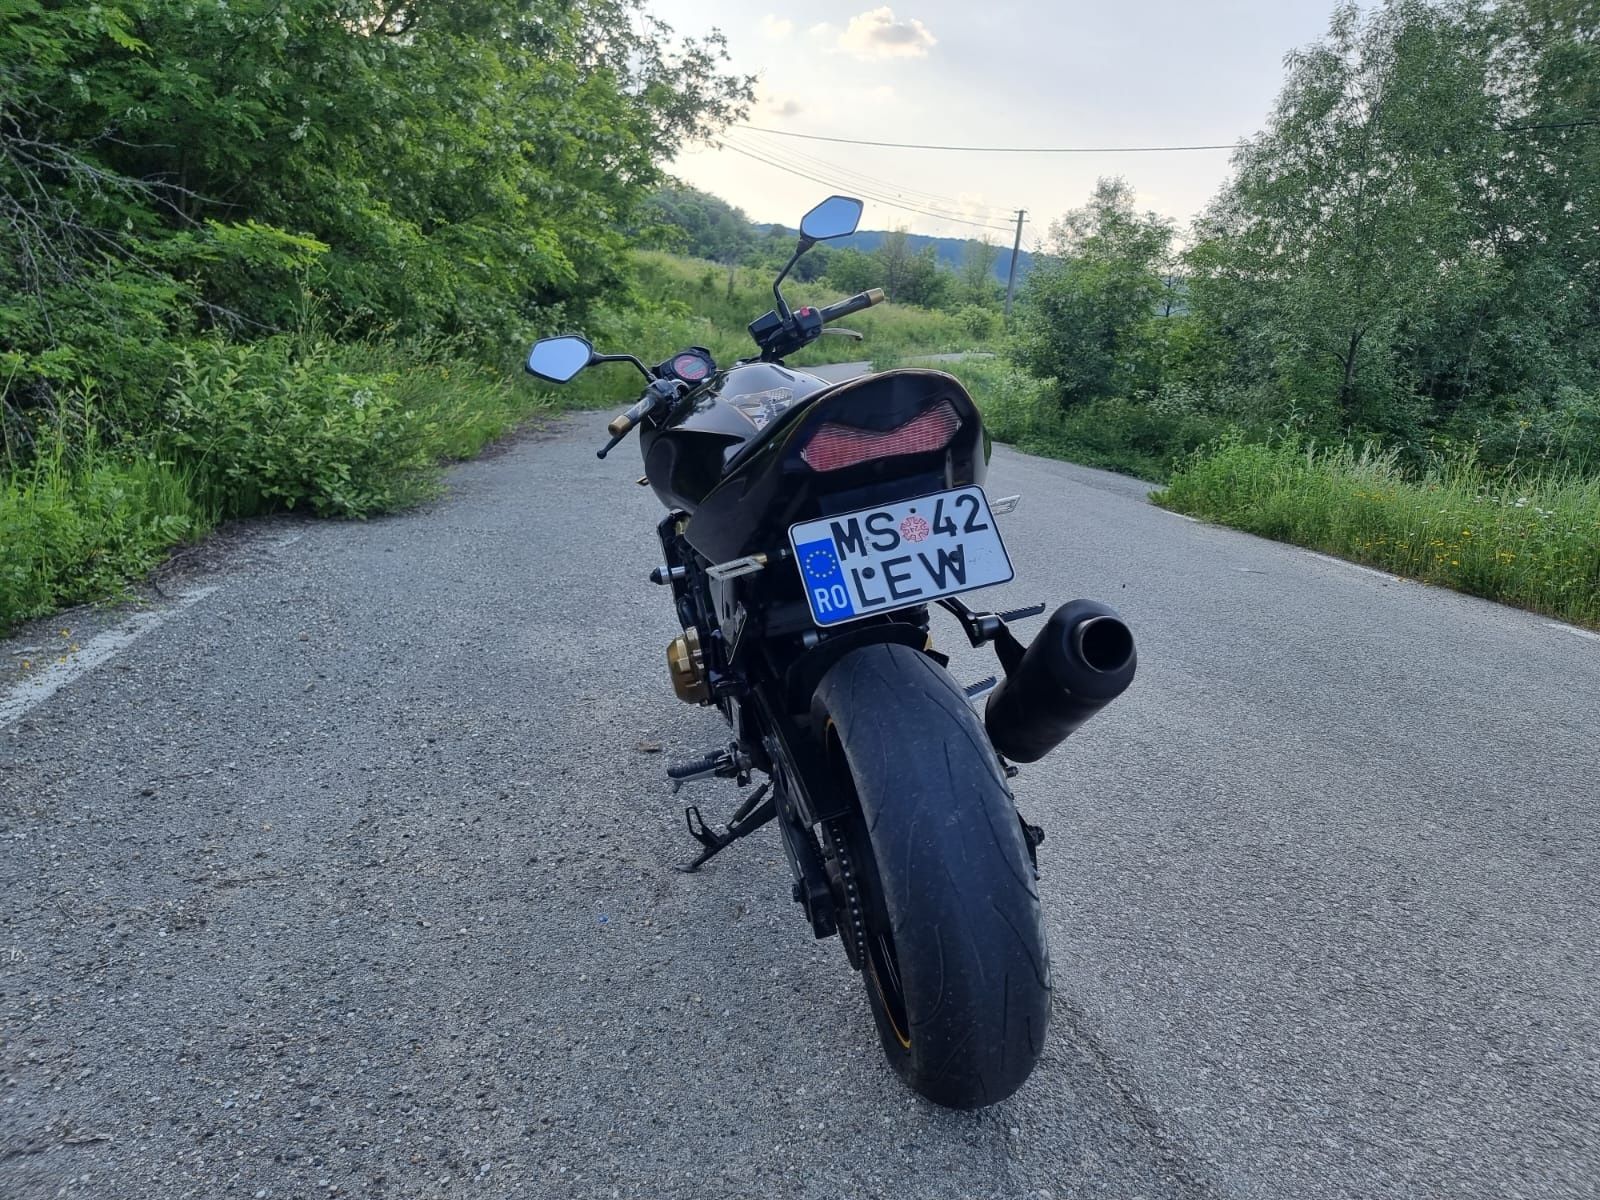 Vând motocicleta Kawasaki Z 750cc